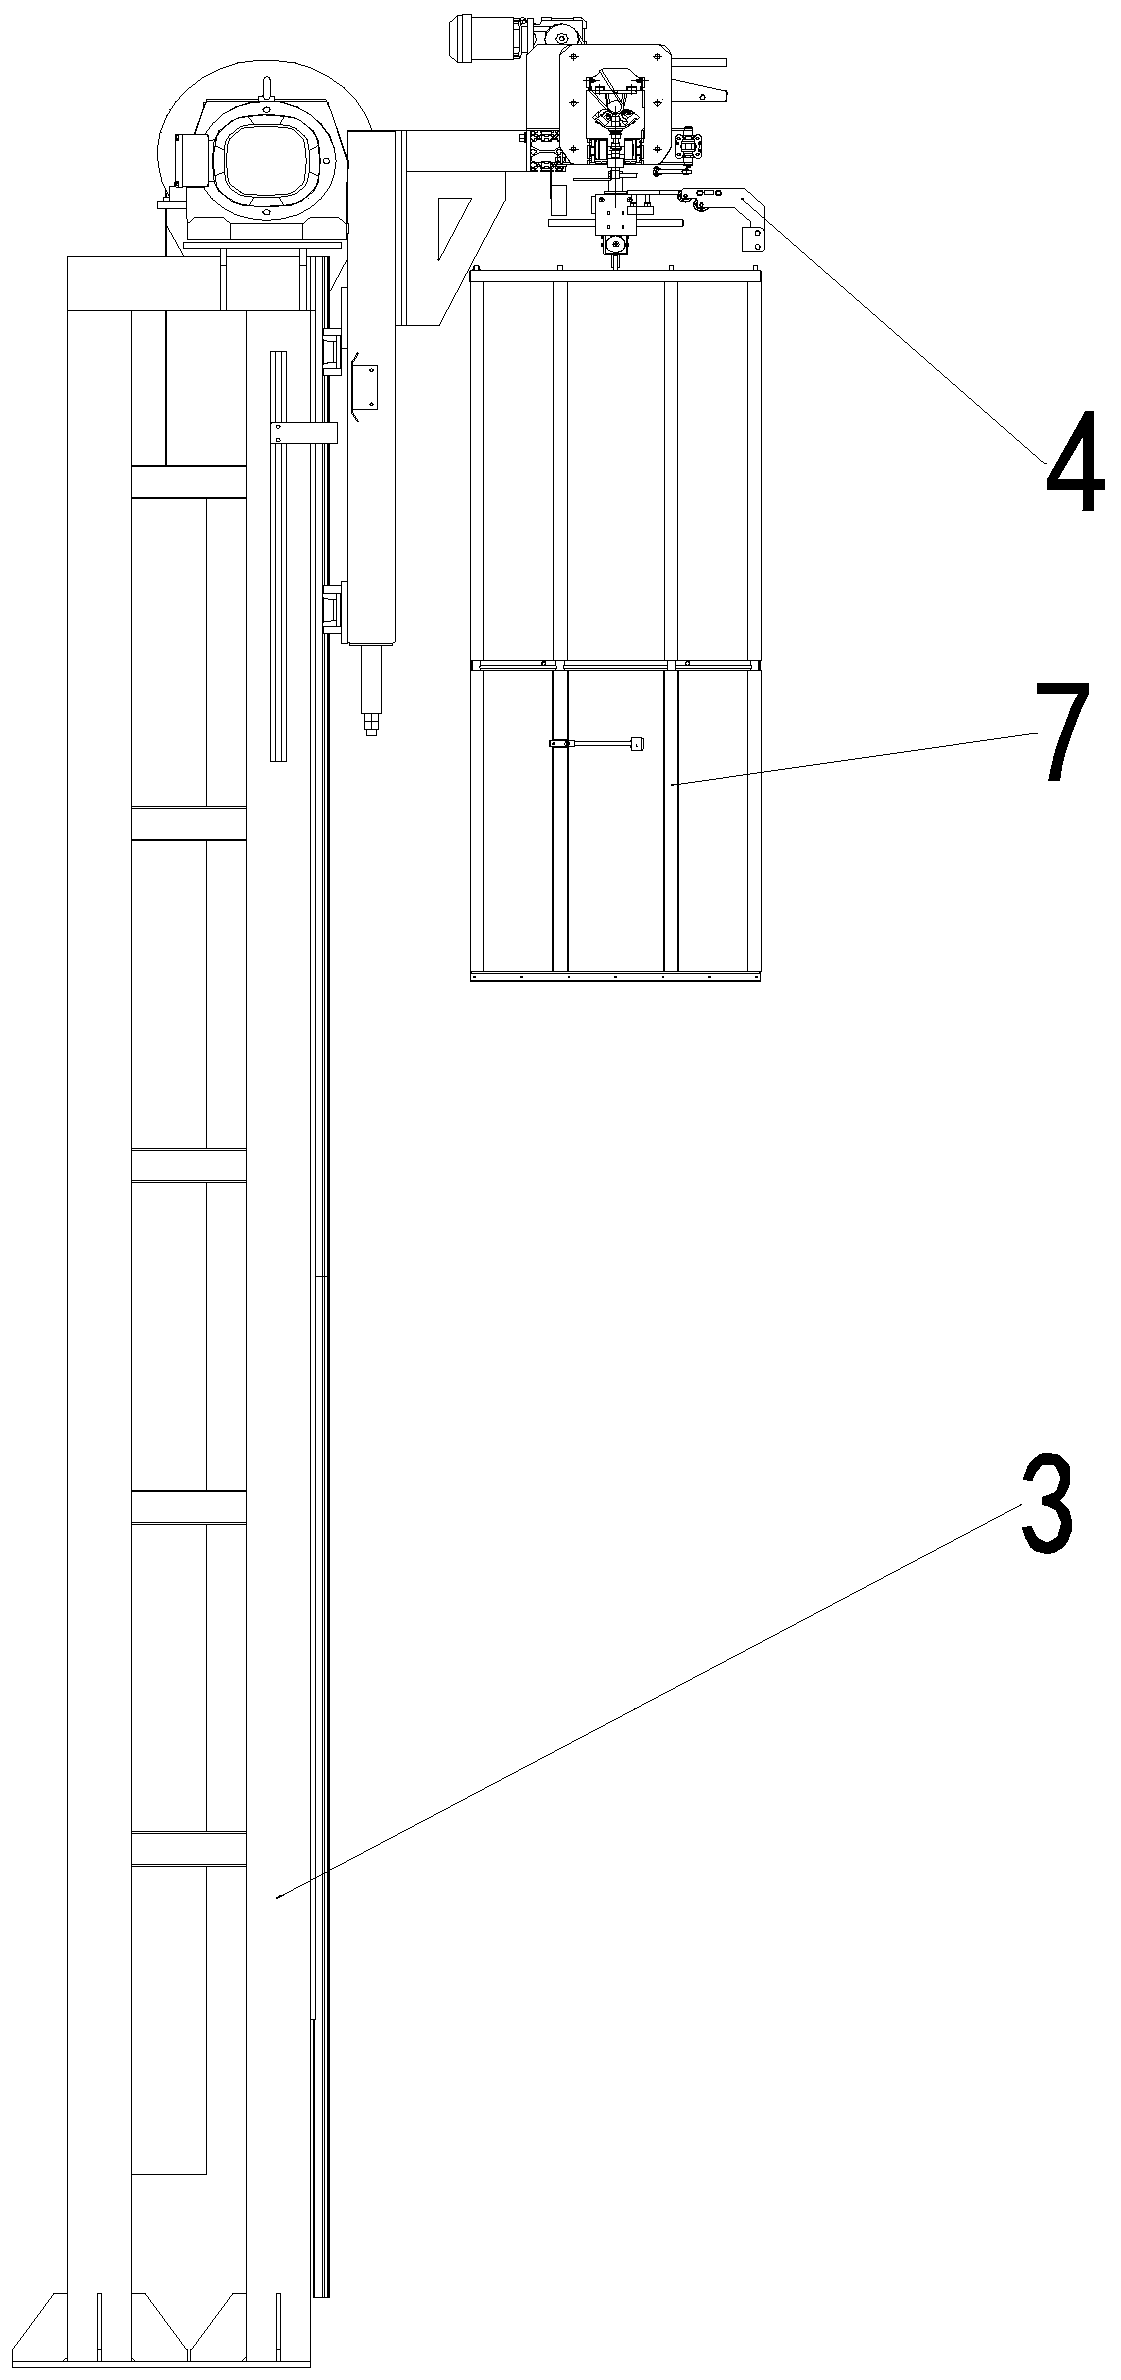 Suspension conveyor line containing elevator